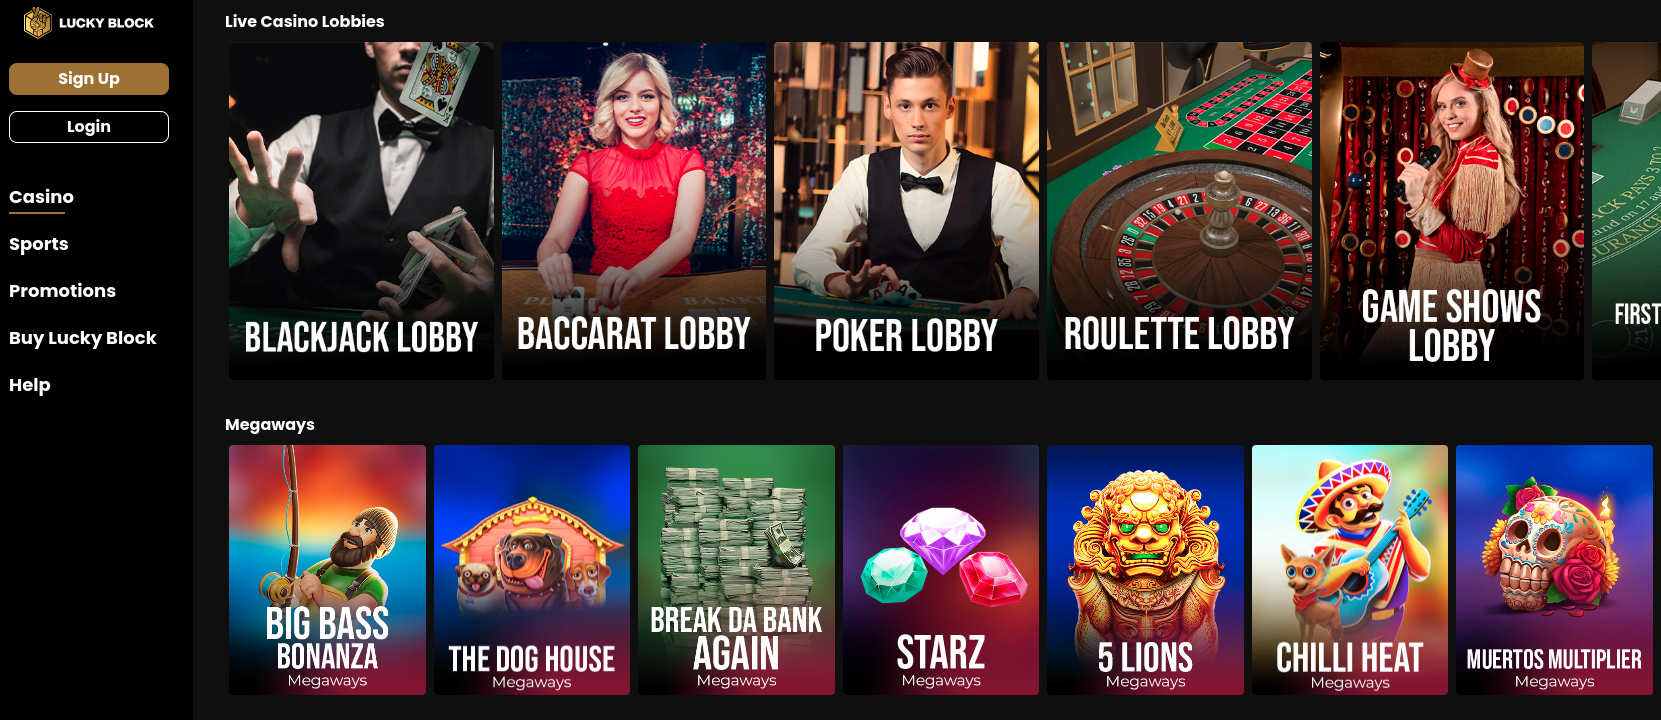 Lucky Block Casino Lobby